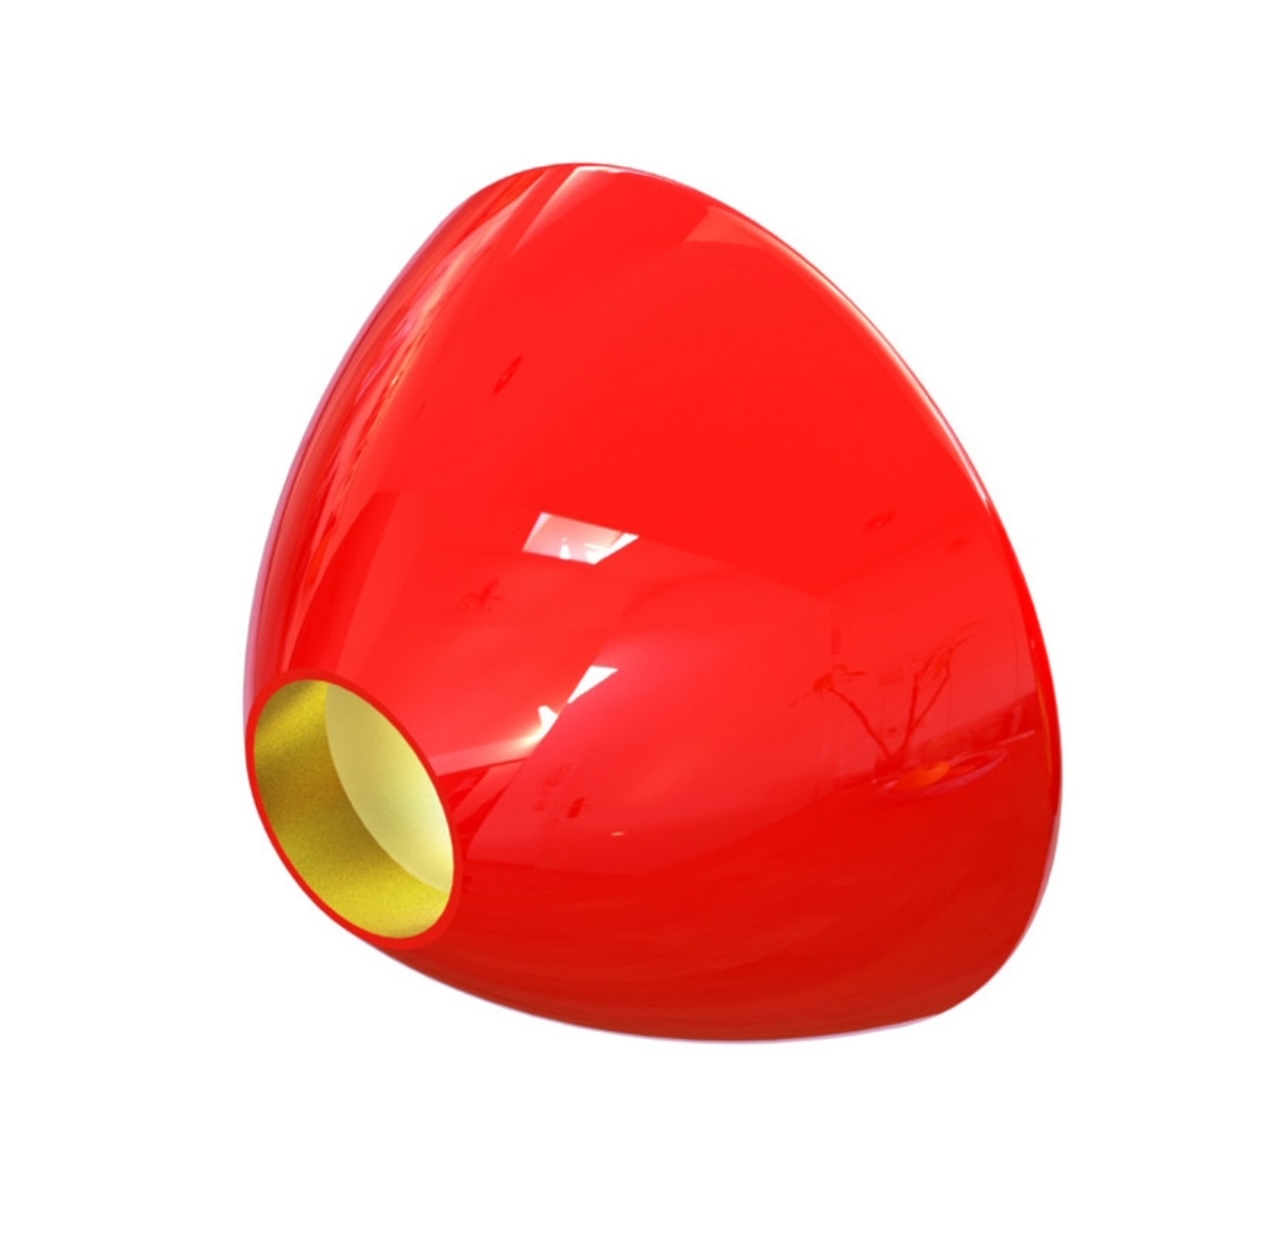 Pro Sportfisher Conehead - Medium - Red